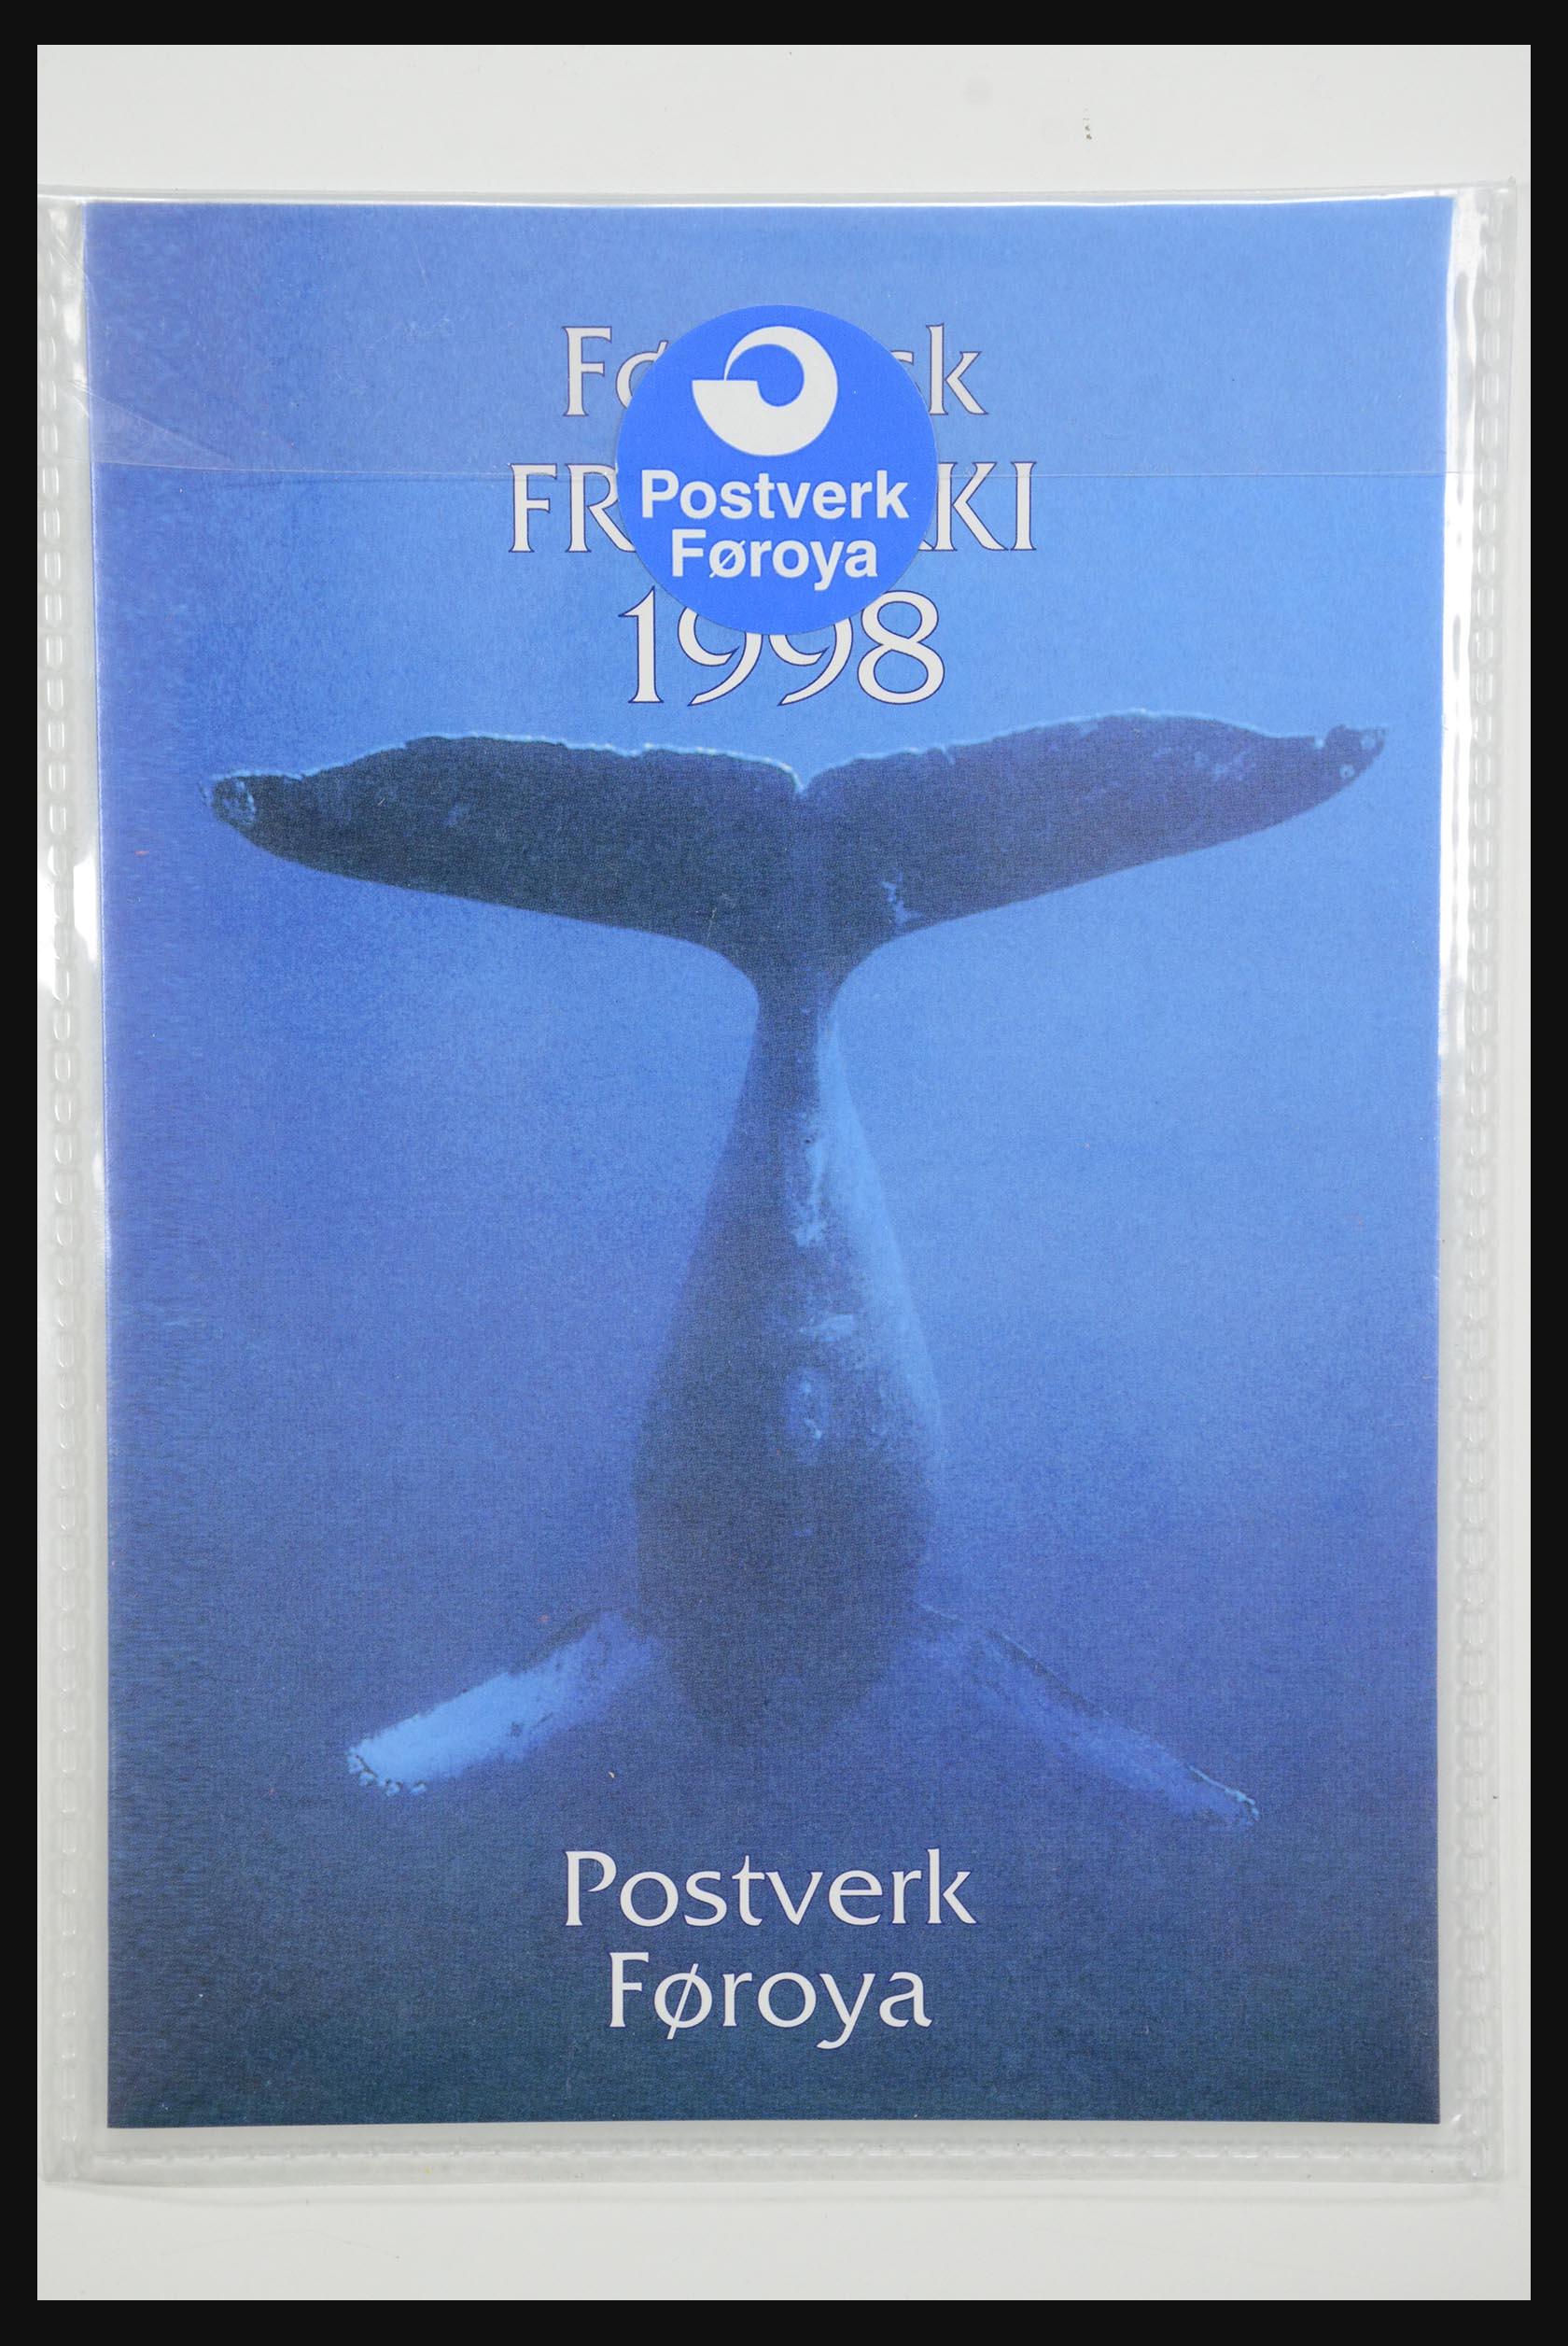 31984 006 - 31984 Faroe Islands yearsets 1993-2012.